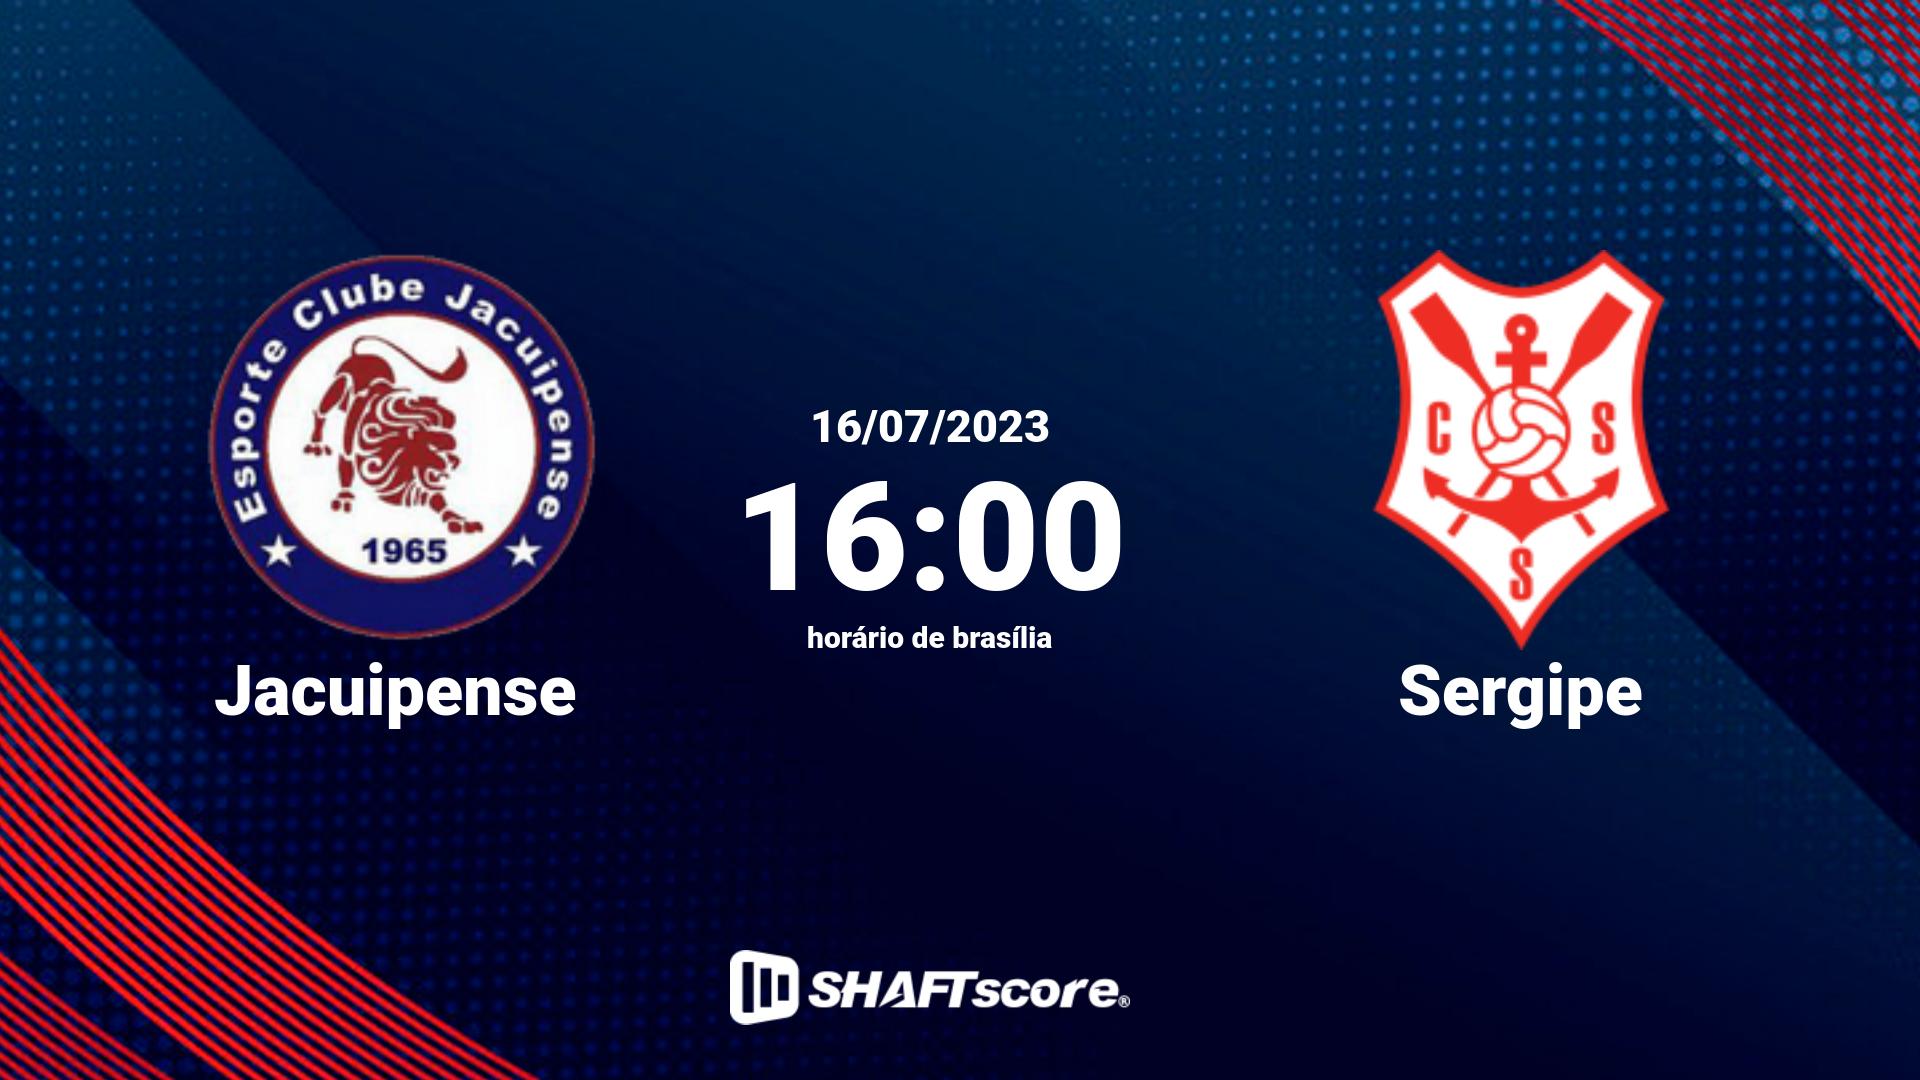 Estatísticas do jogo Jacuipense vs Sergipe 16.07 16:00